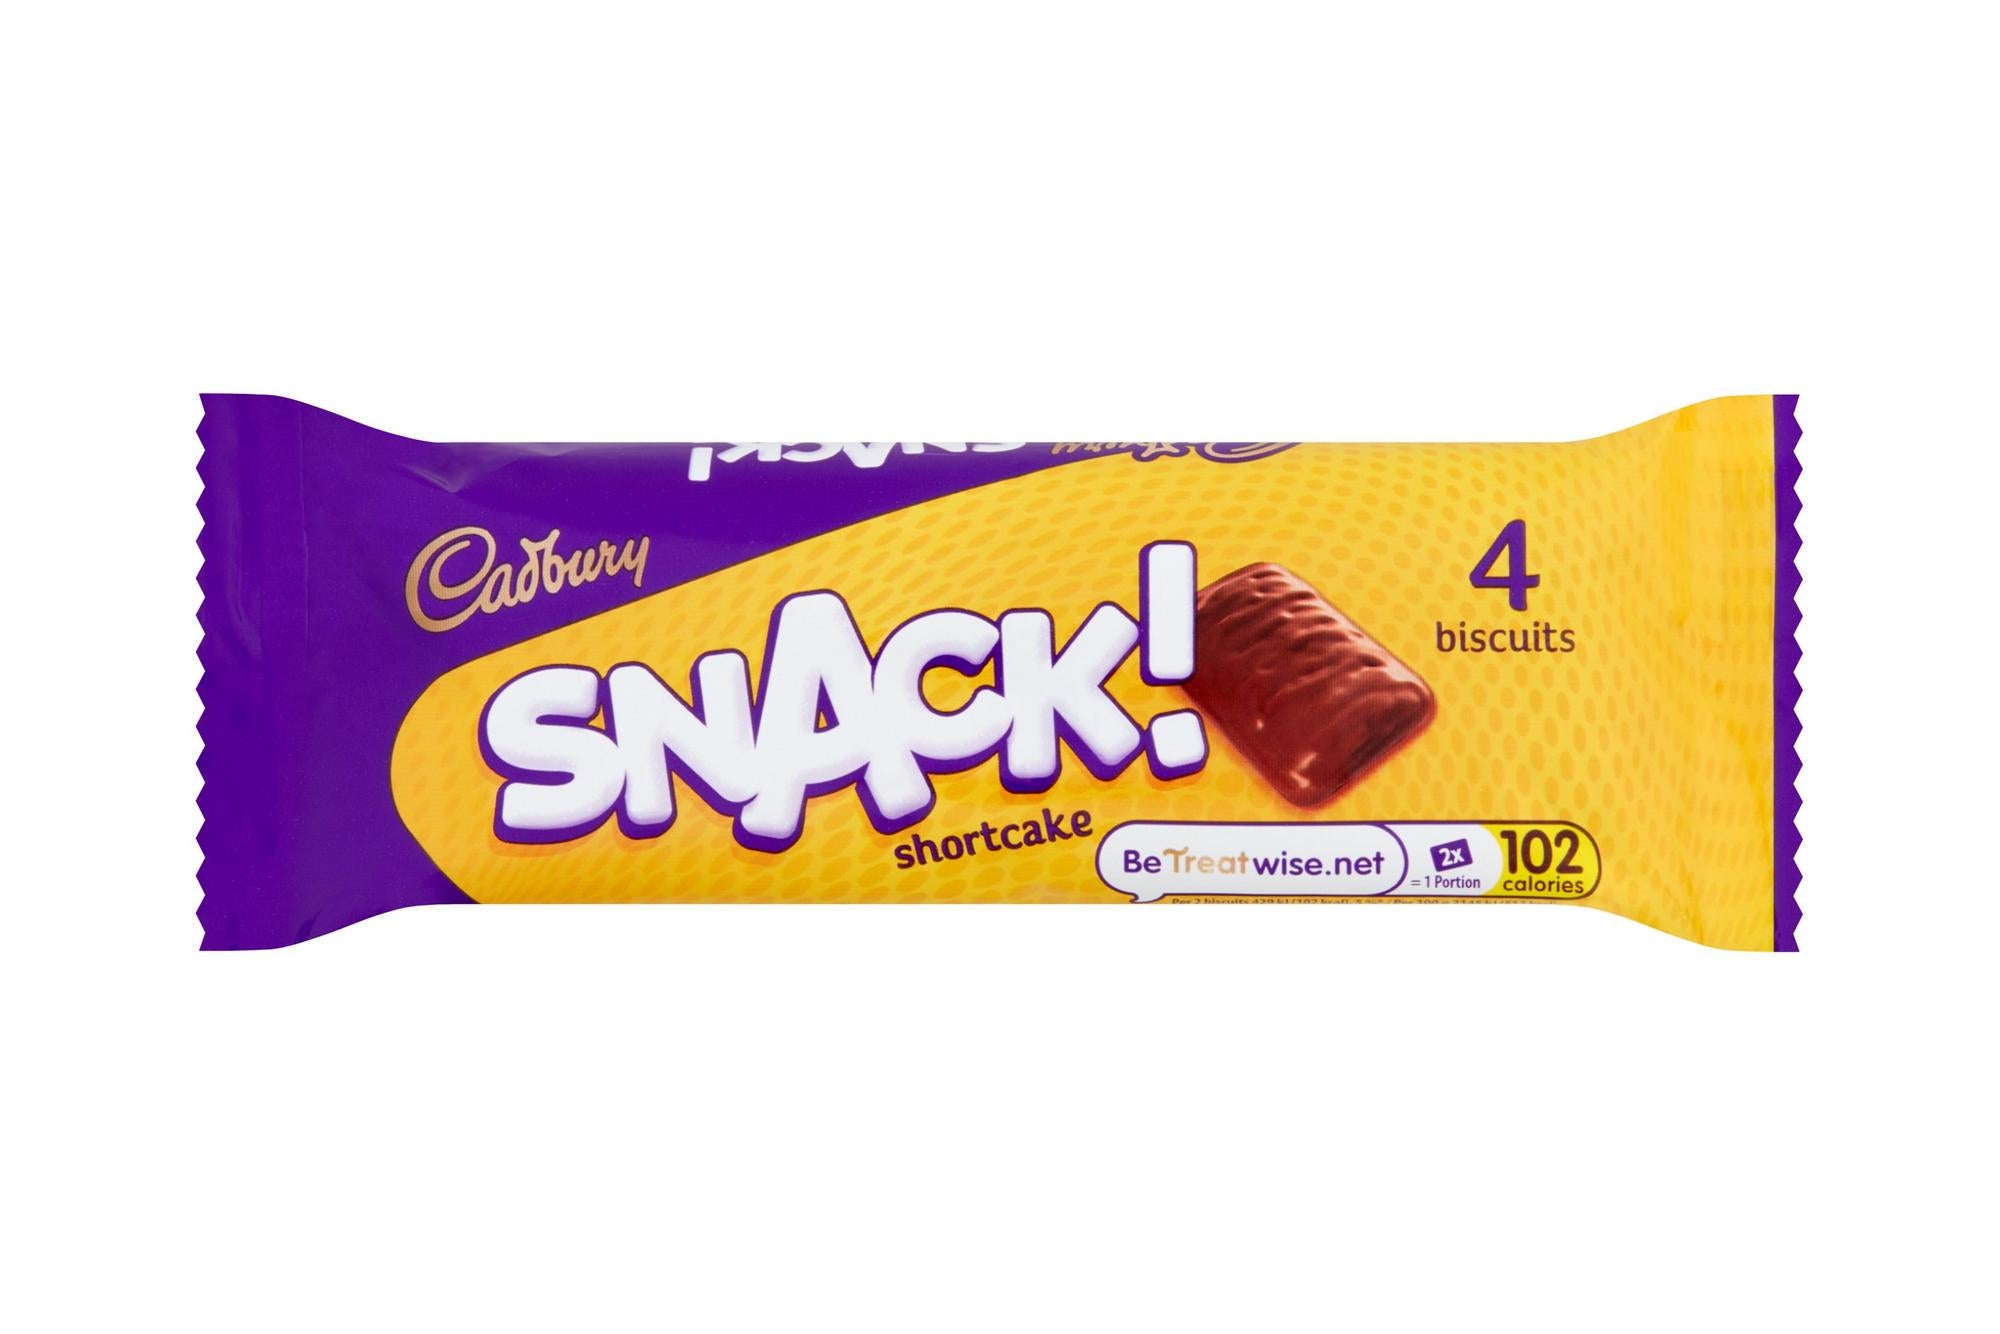 Cadbury Shortcake Snack